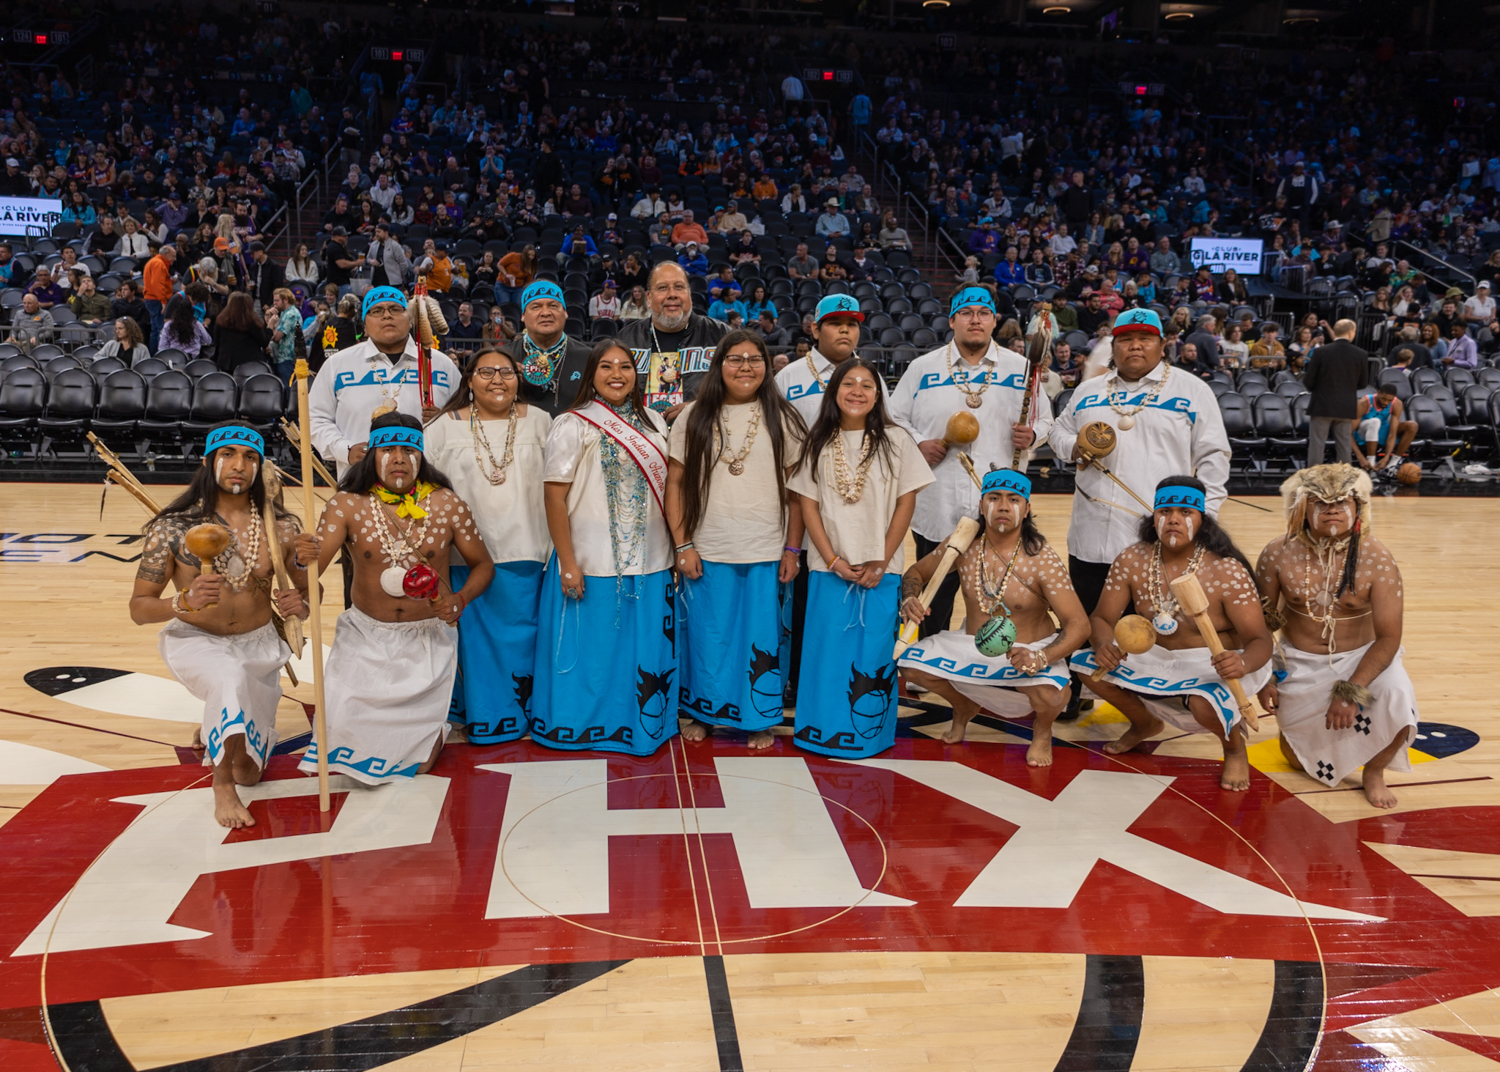 National Native American Games kick off across Phoenix